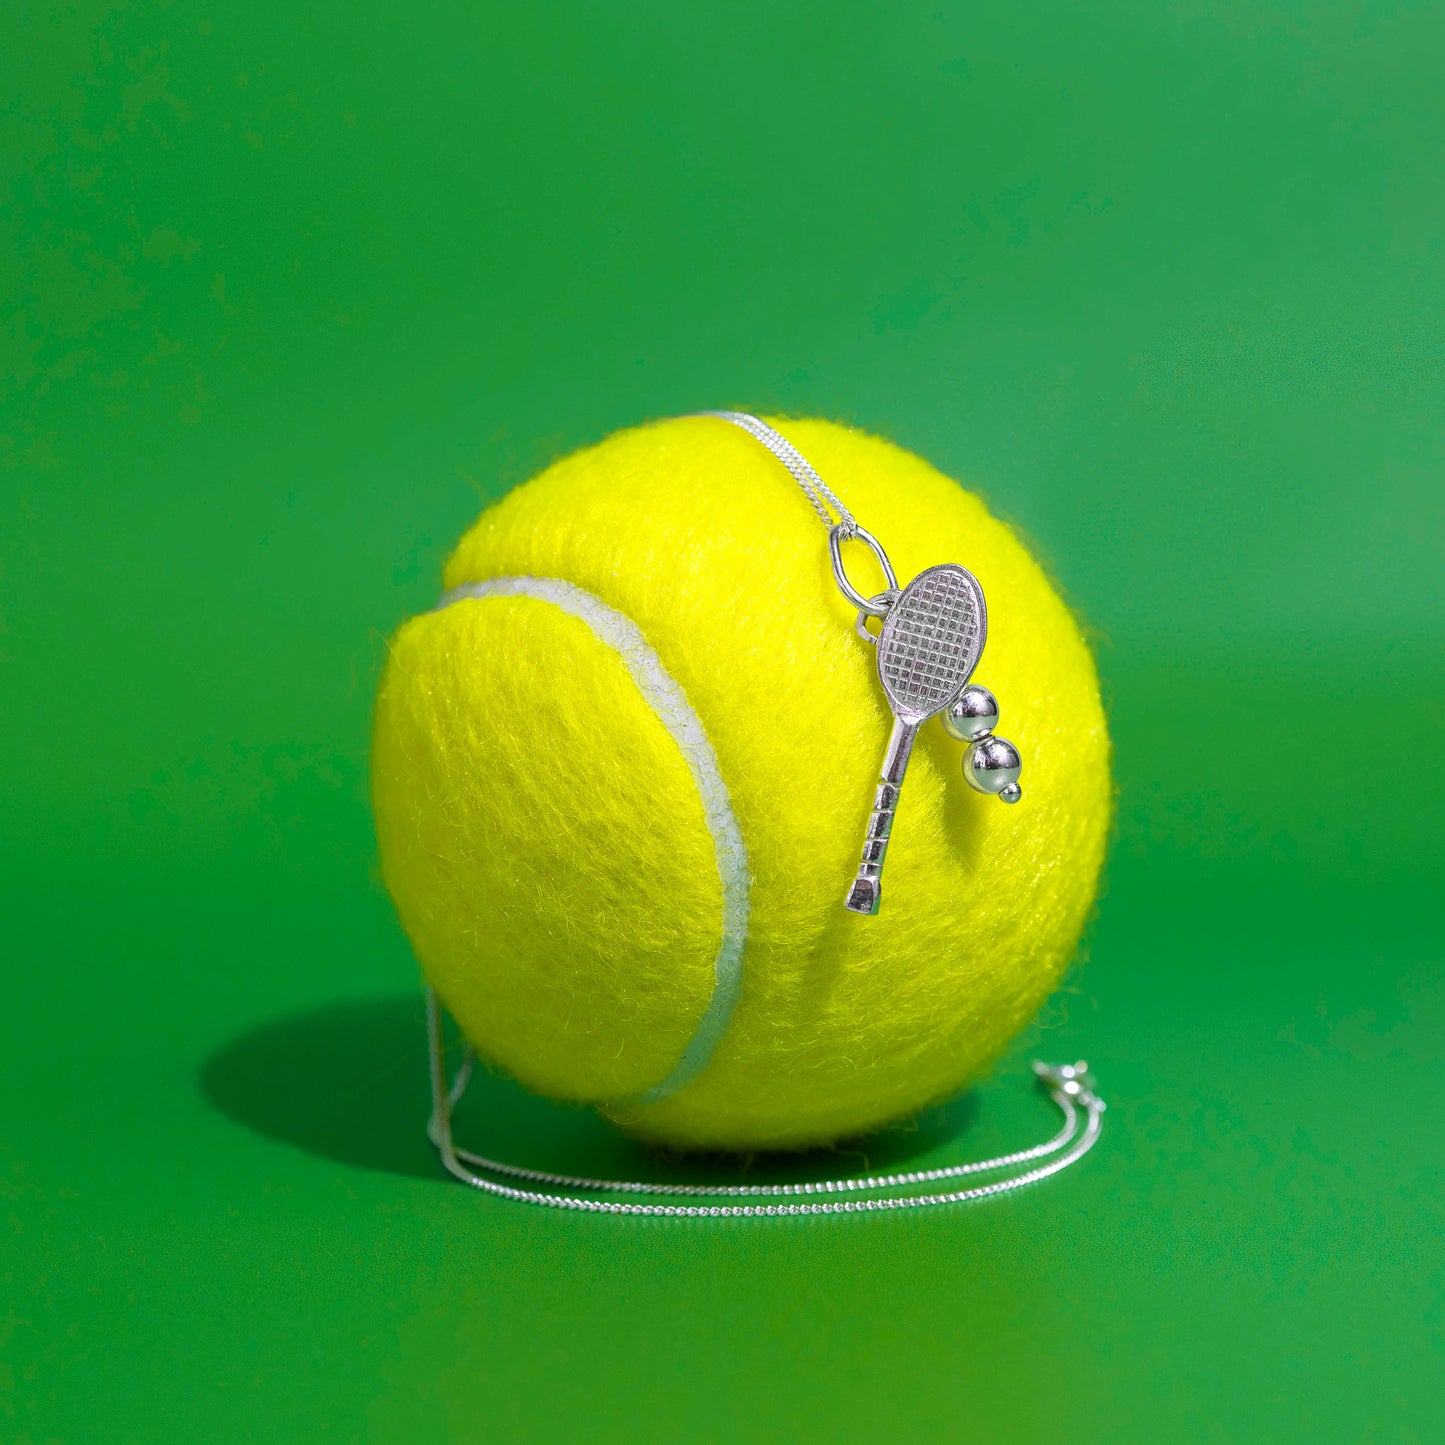 Tennis ball with tennis pendant